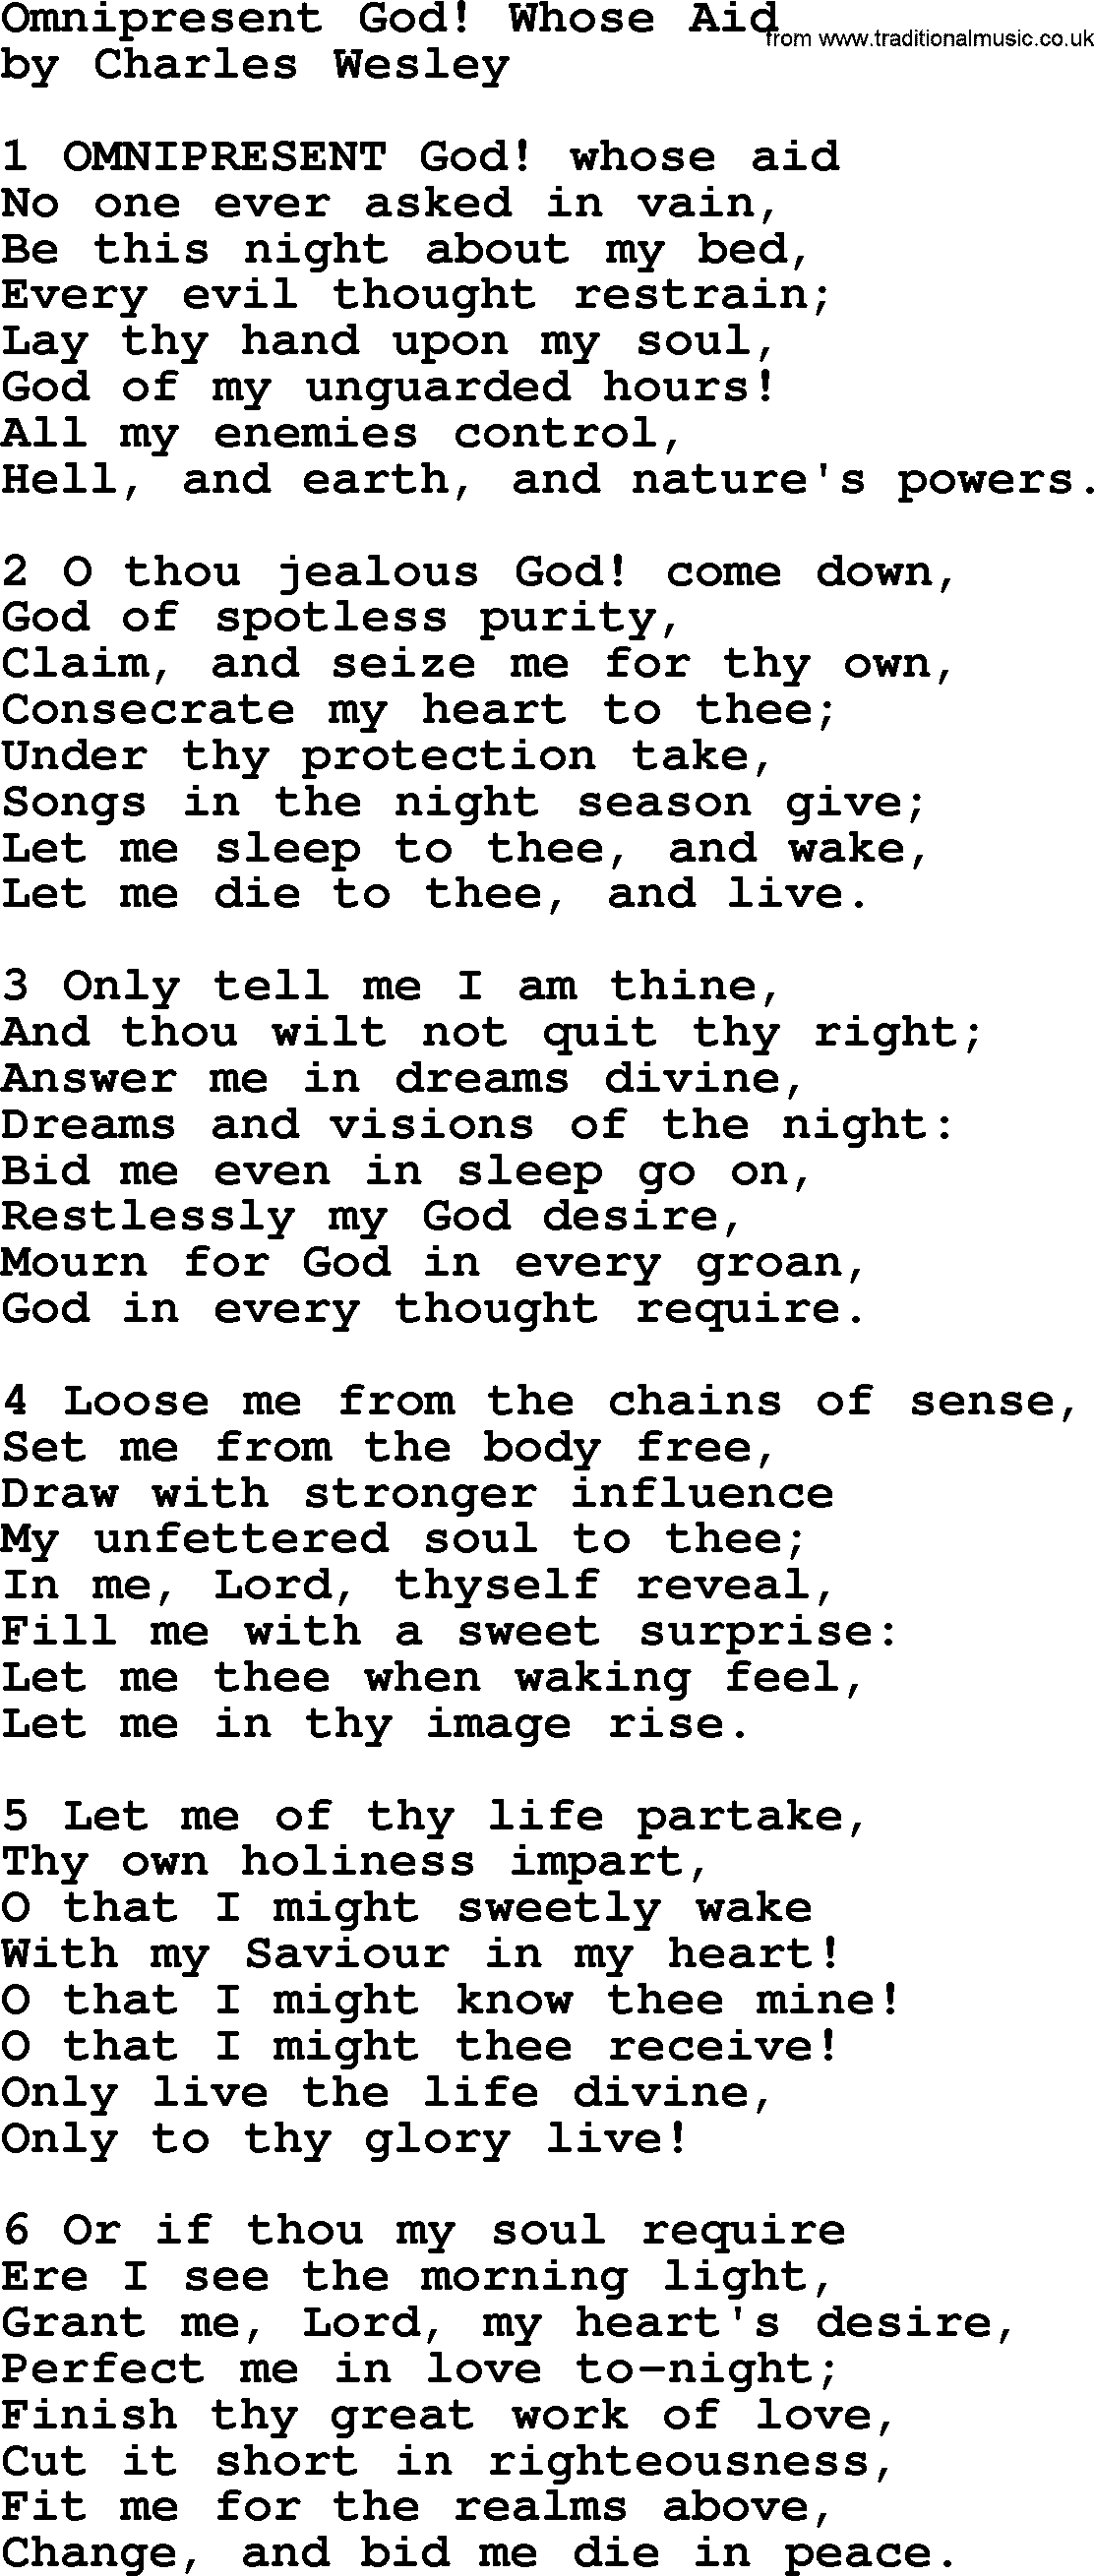 Charles Wesley hymn: Omnipresent God! Whose Aid, lyrics